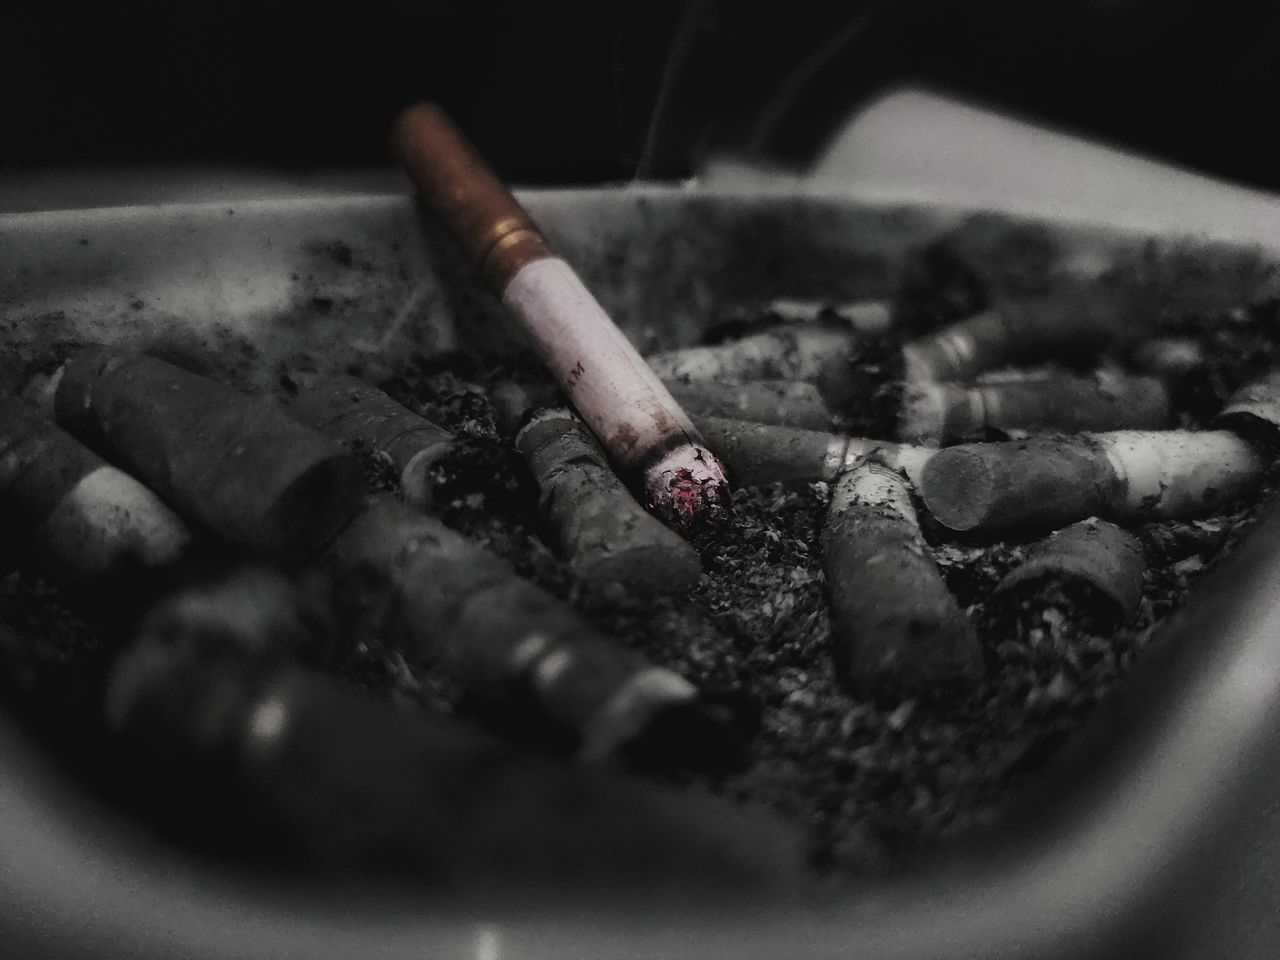 CLOSE-UP OF CIGARETTE SMOKING ON FLOOR